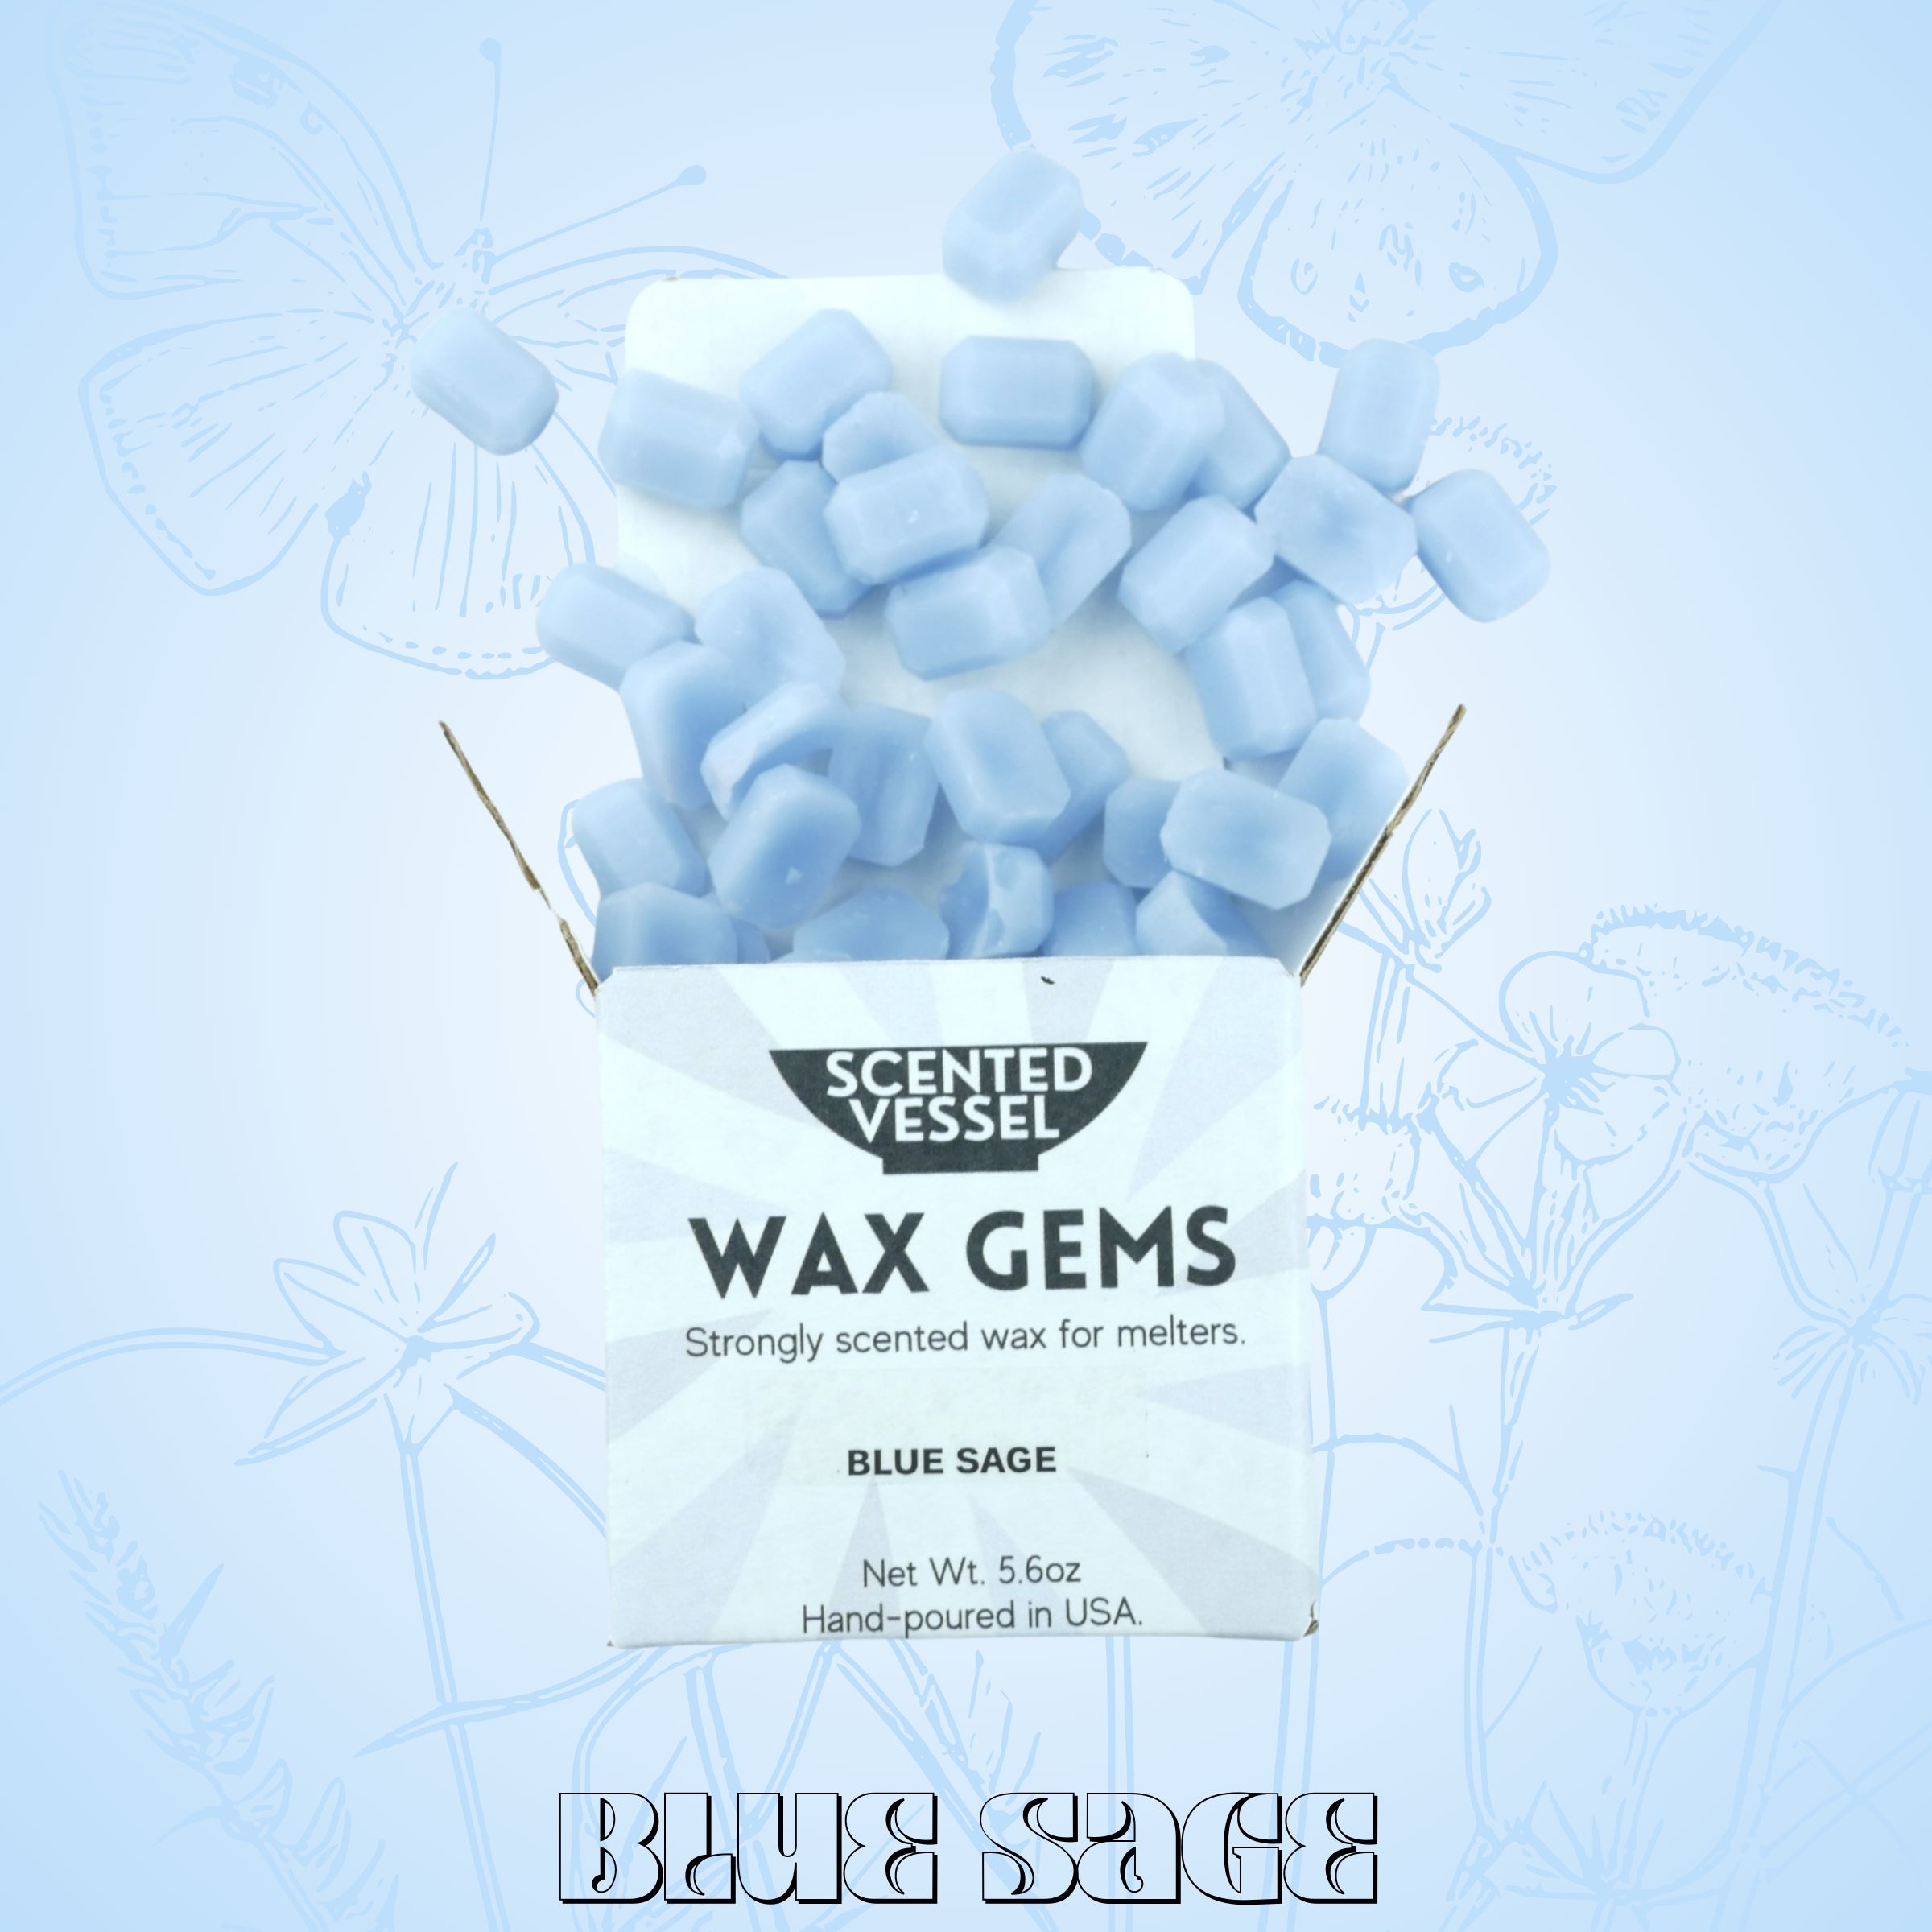 Blue Sage 5.6oz Wax Gems by Scented Vessel